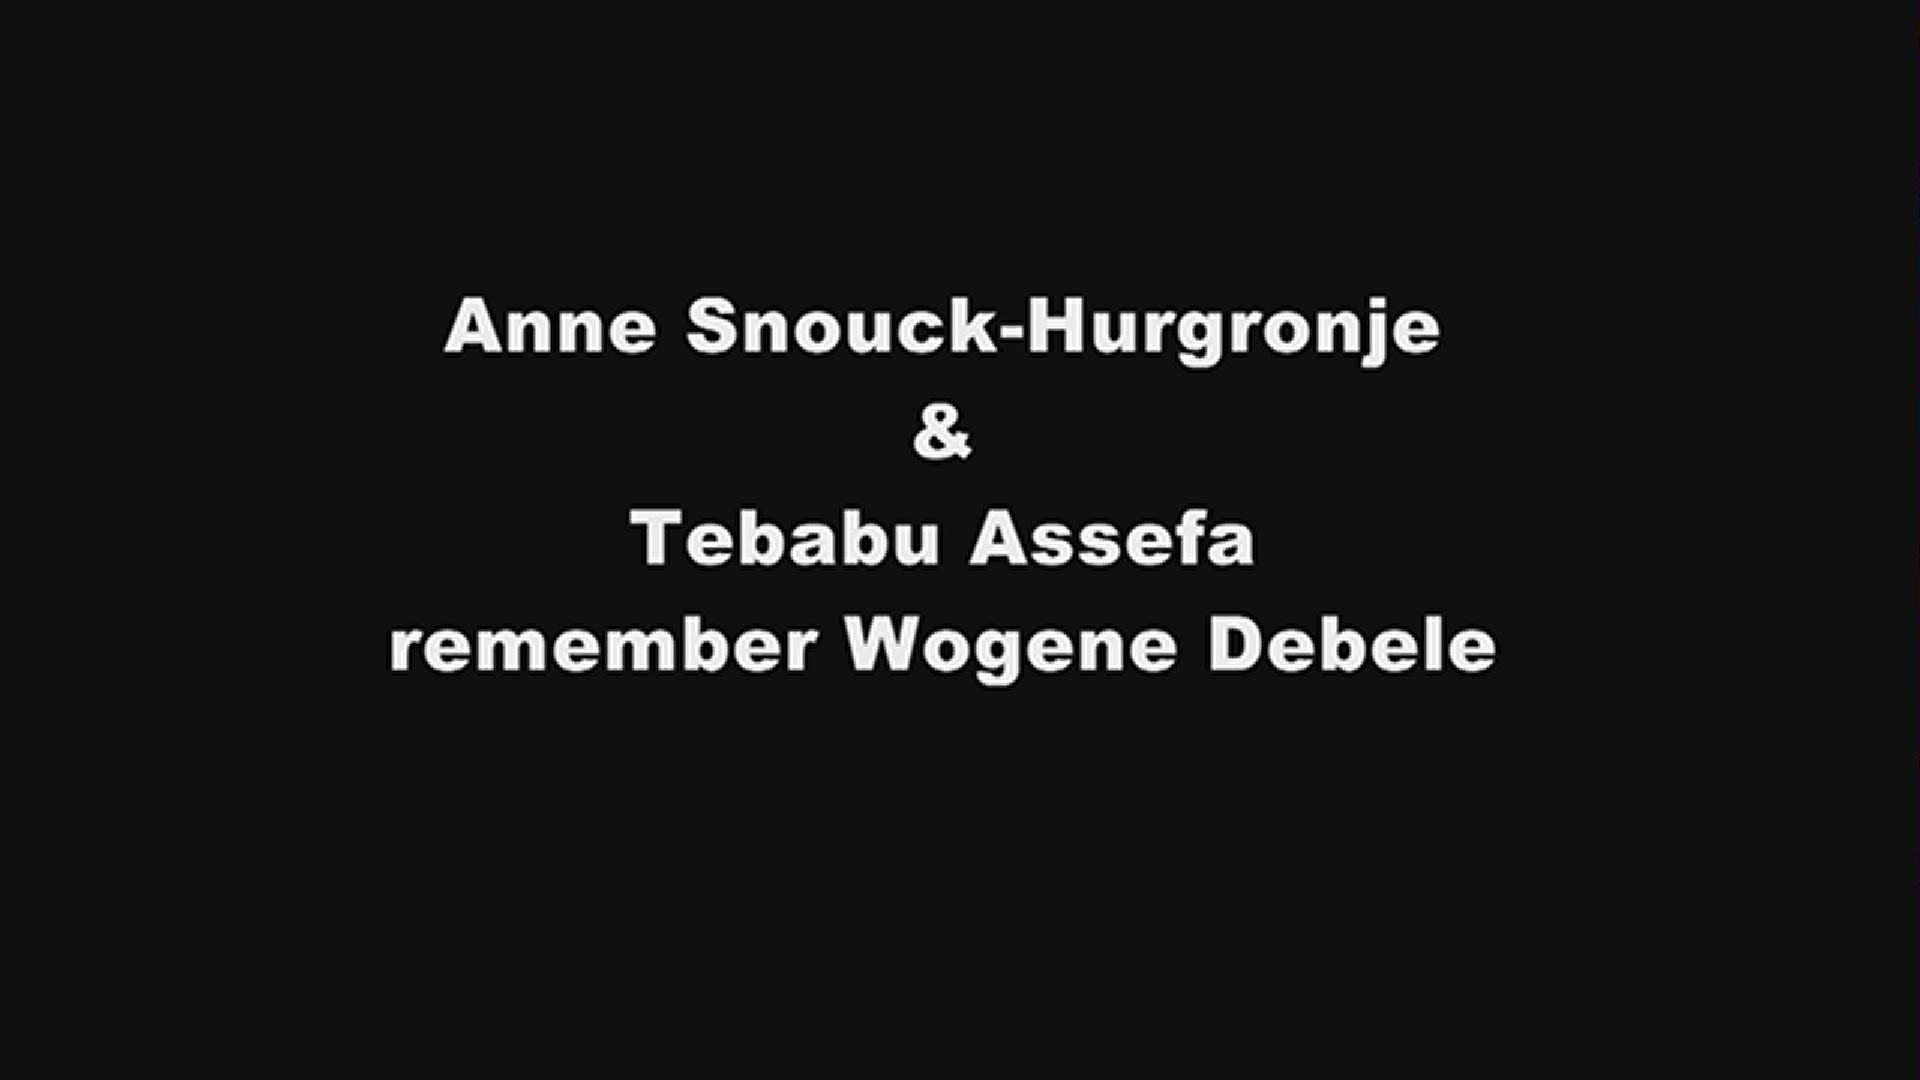 Anne Snouck-Hurgronje & Tebabu Assefa react to the passing of their friend Wogene Debele.